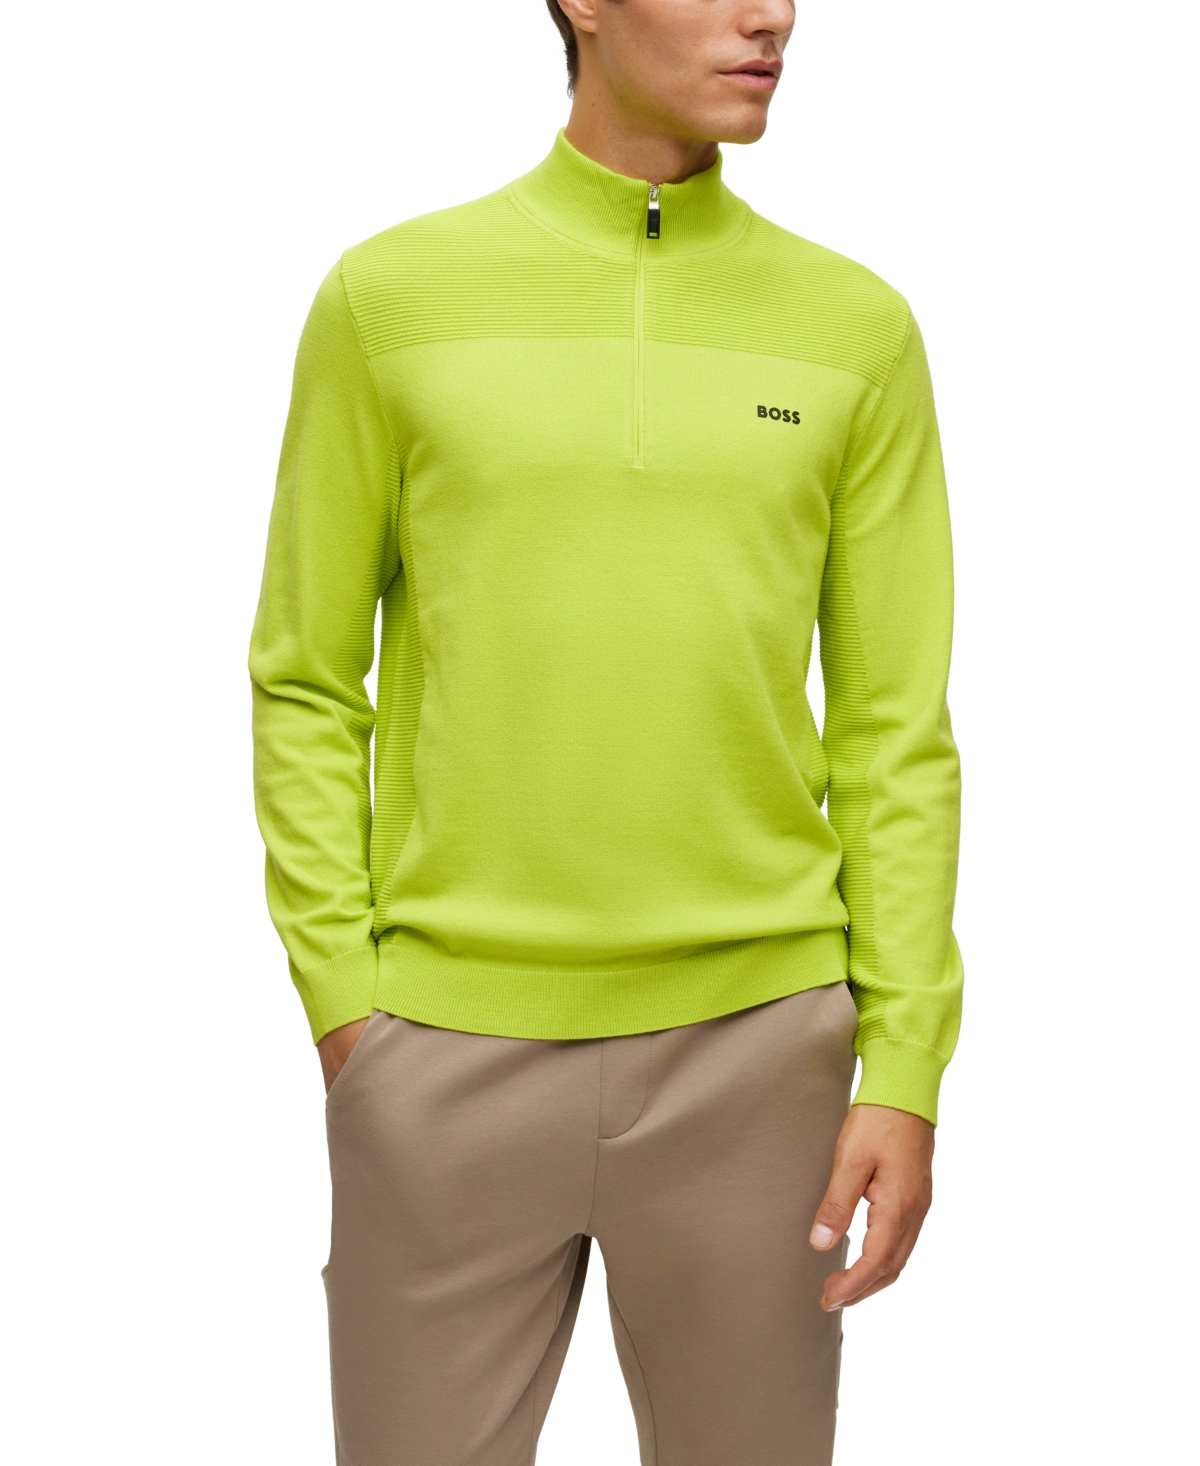 Boss by Hugo Boss Men's Branded Zip-Neck Sweater - Bright Green